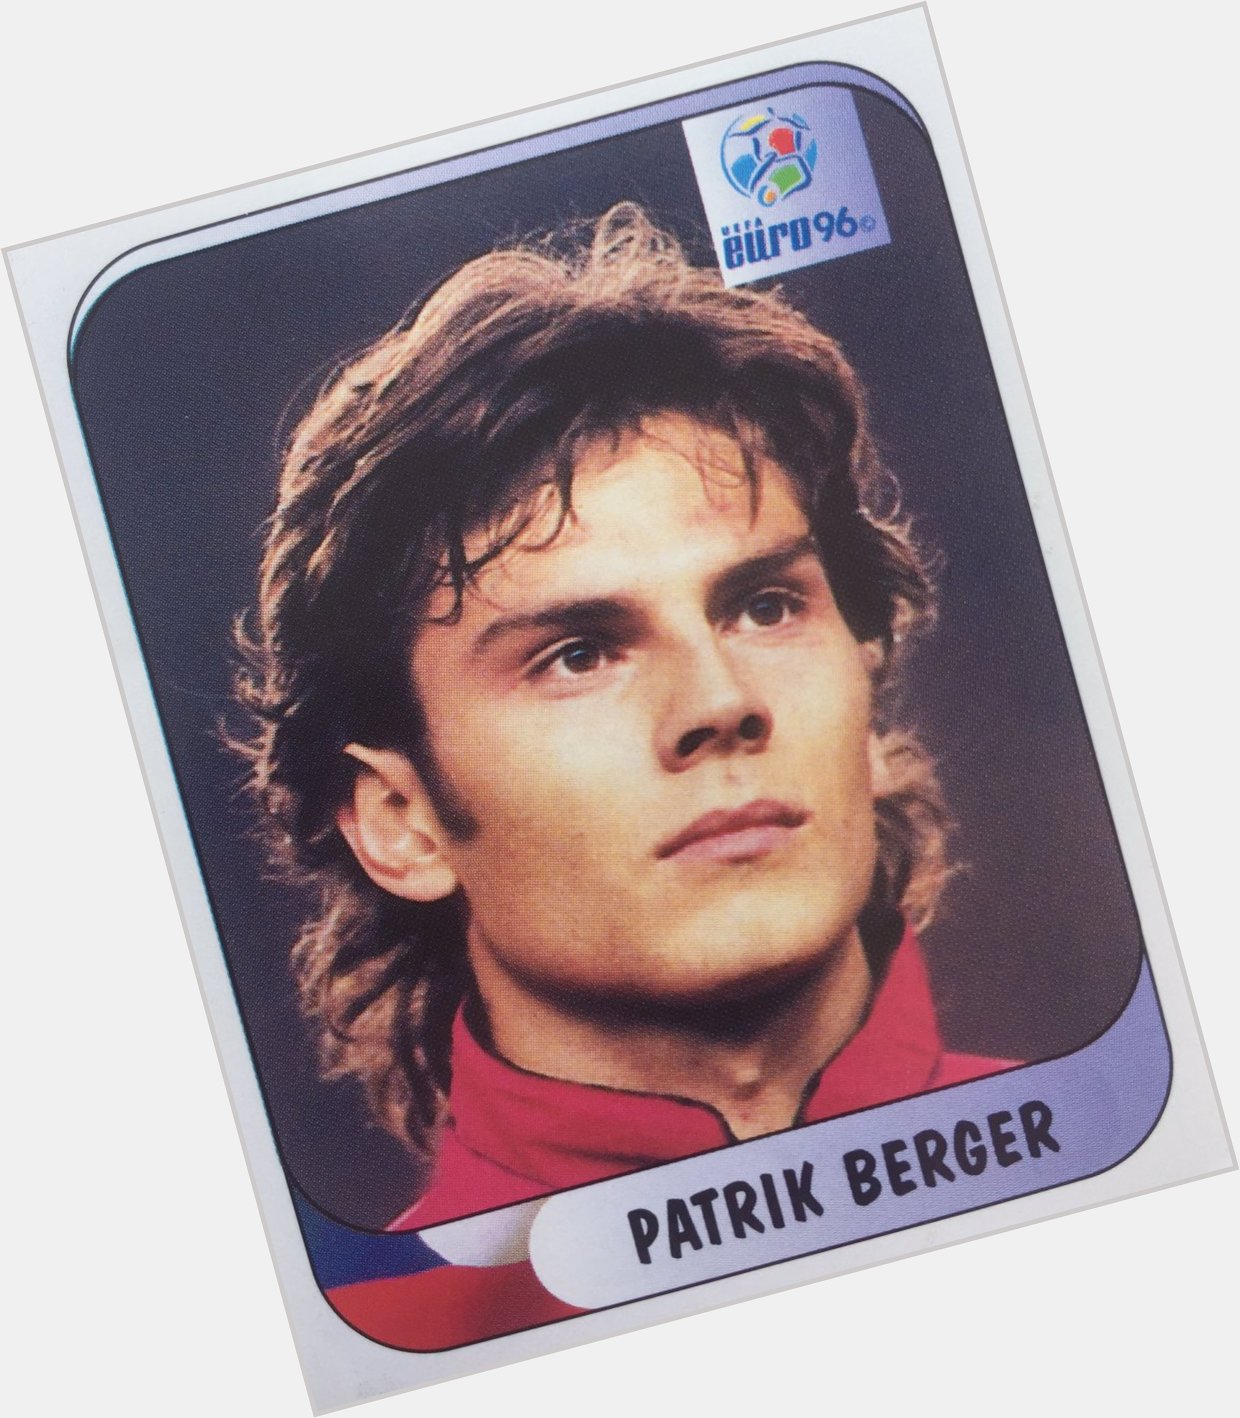 Patrik Berger - Czech Republic
Merlin Euro 96
Happy birthday to who was born OTD 1973 